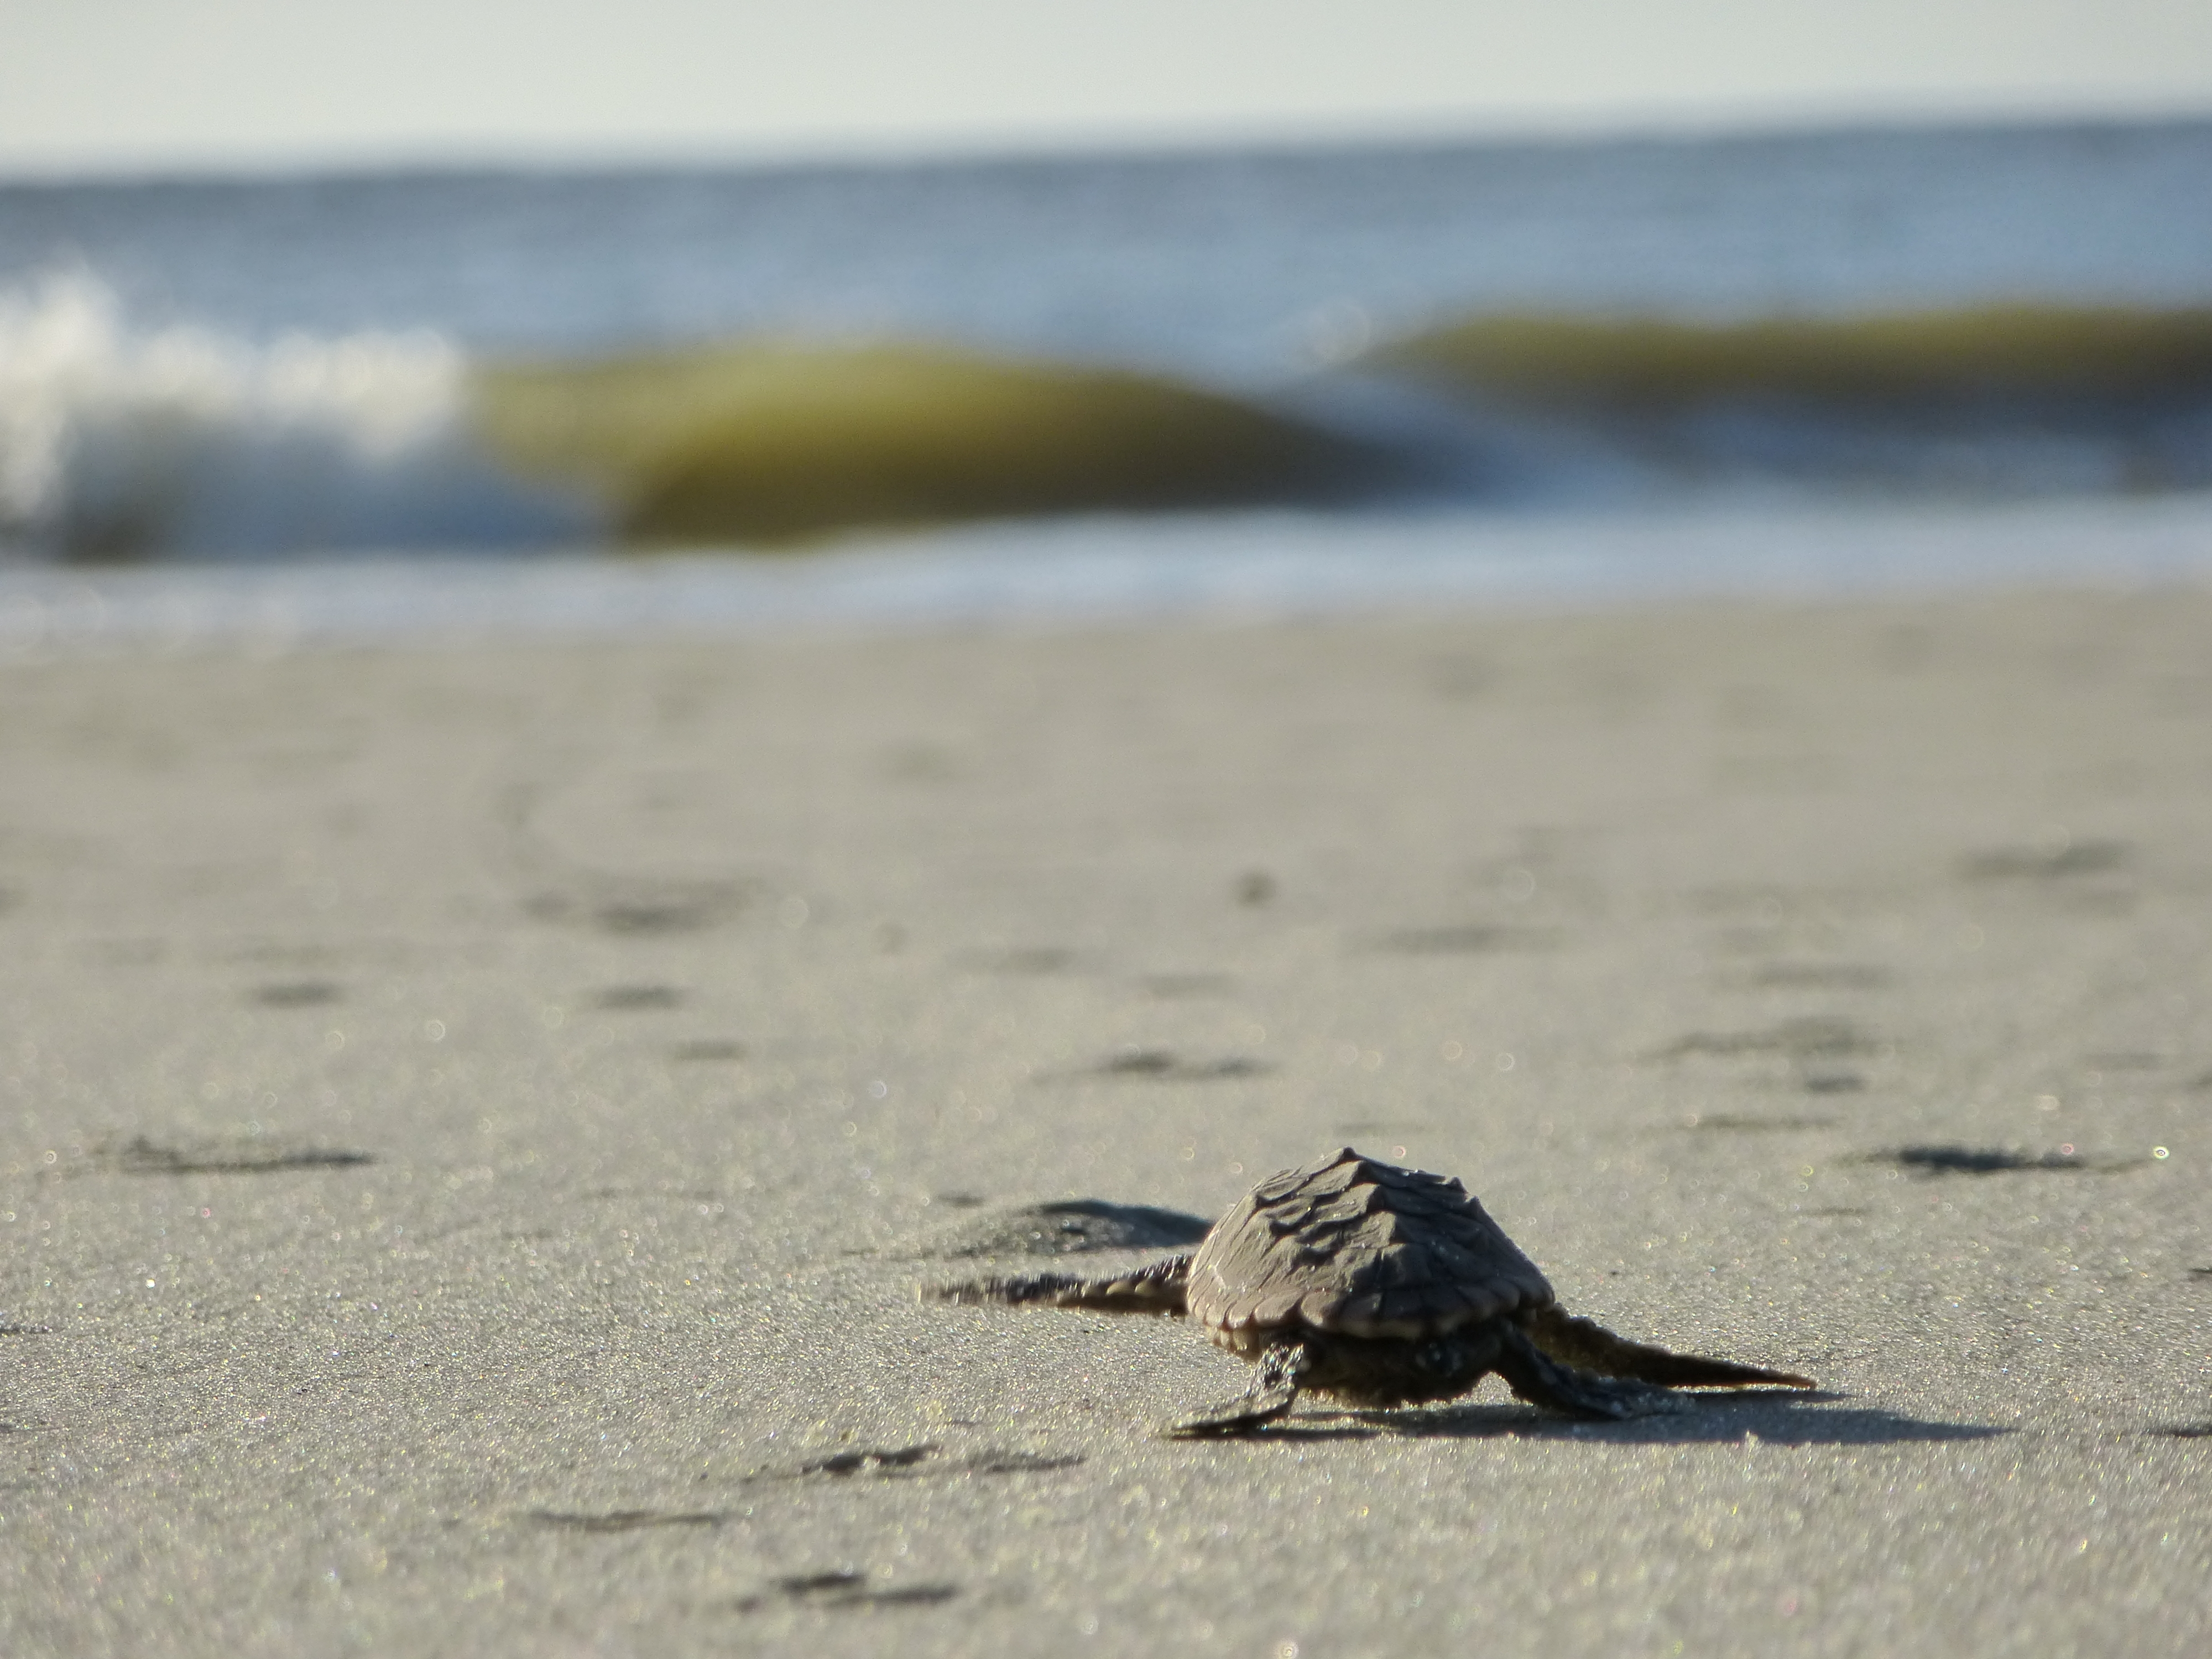 A sea turtle hatchling crawls towards the sea